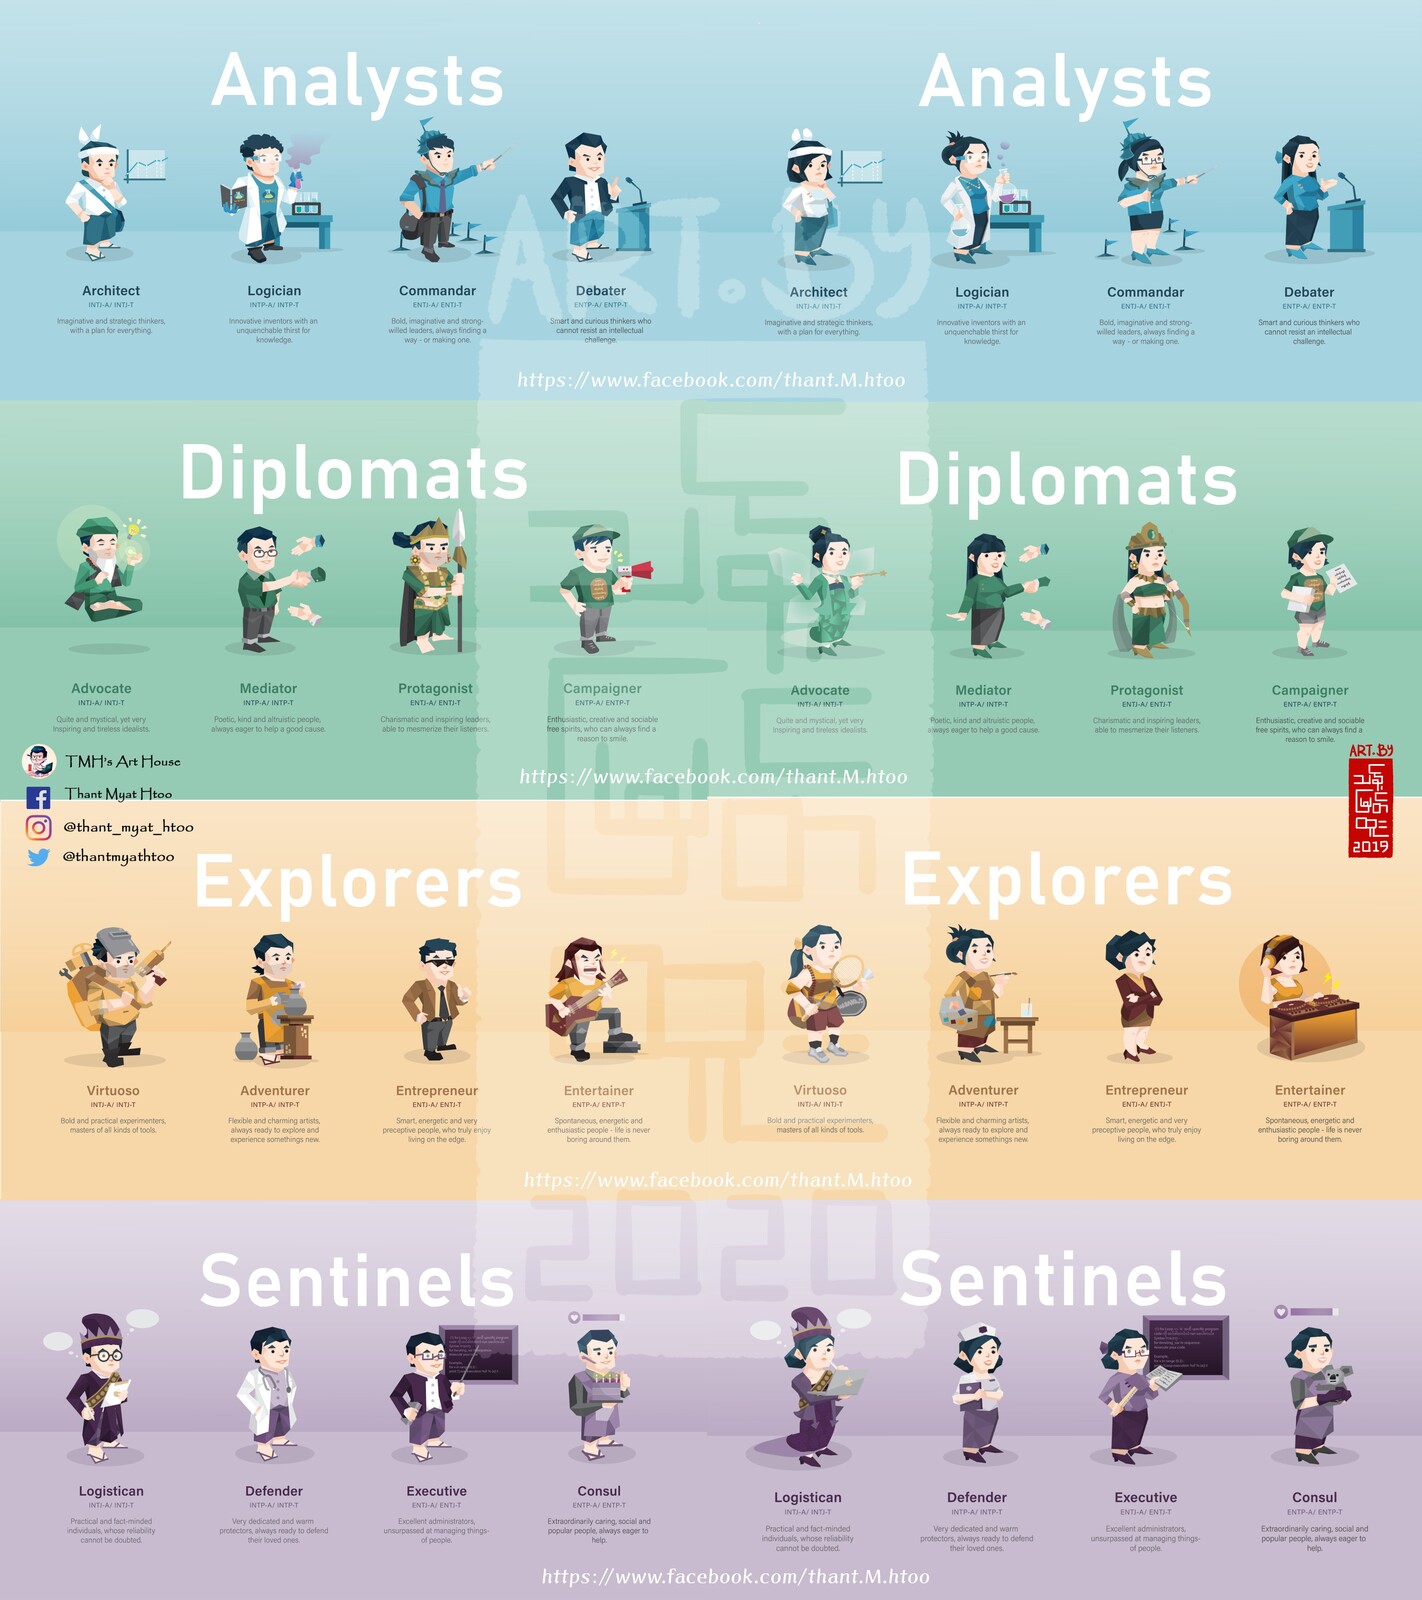 16 Personality Classification Burmese Version